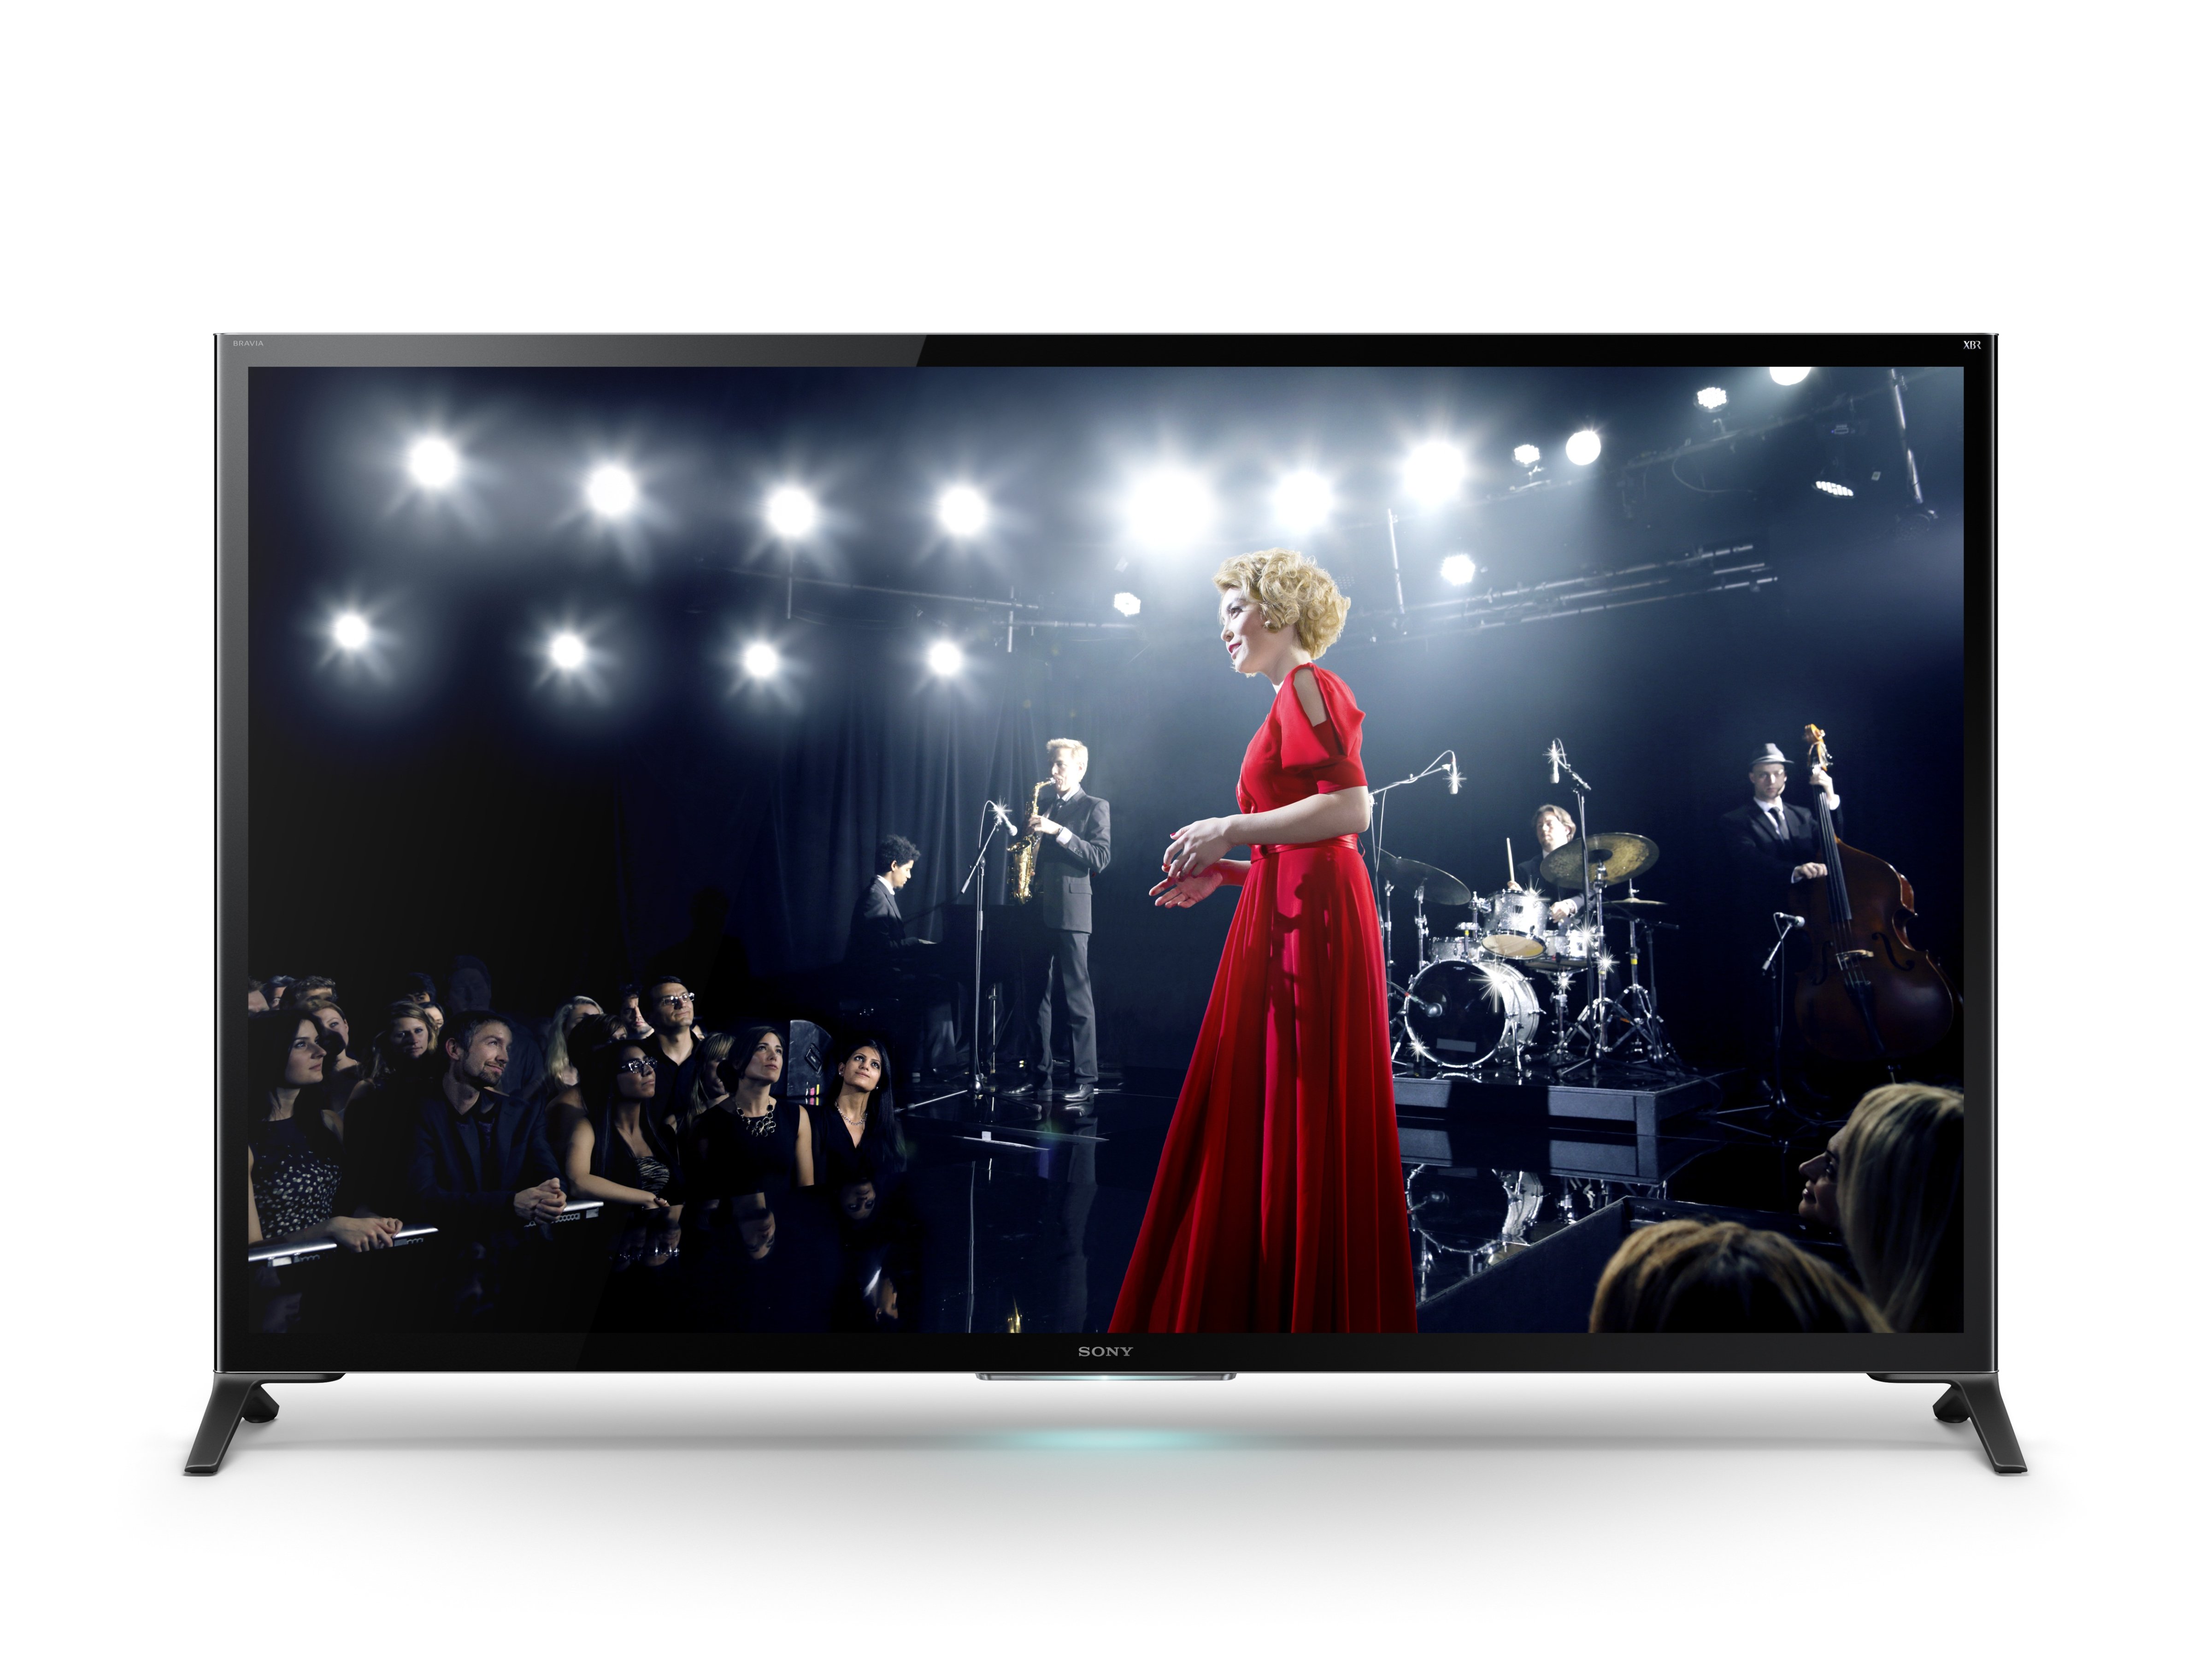 Sony-XBR®-X950B-Series-4K-Ultra-HD-TV